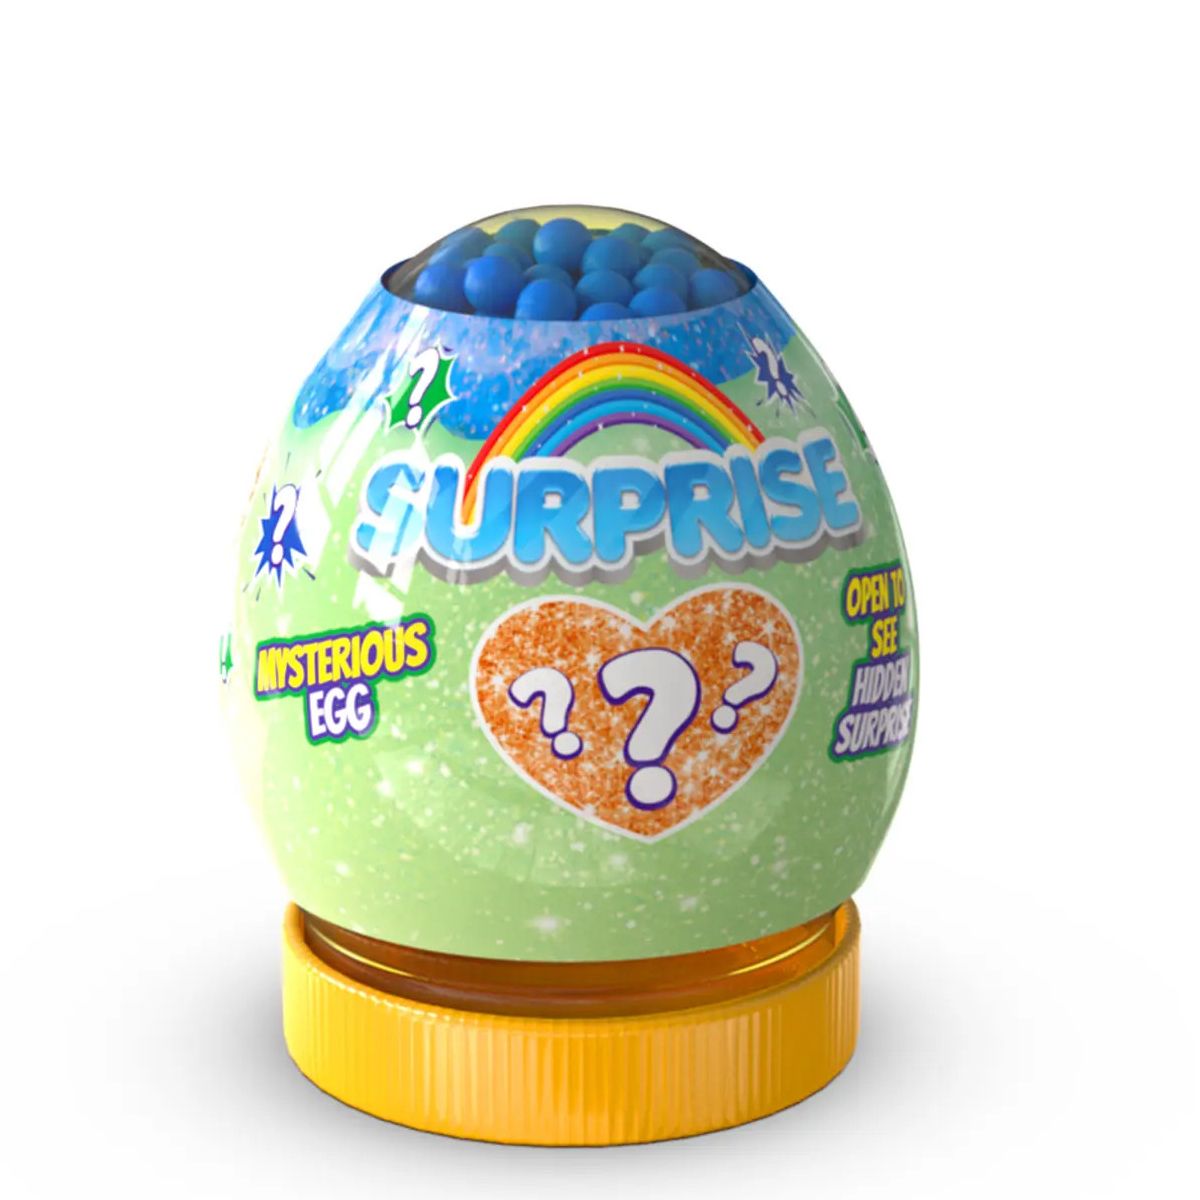 Игрушка-сюрприз "Surprize Egg"